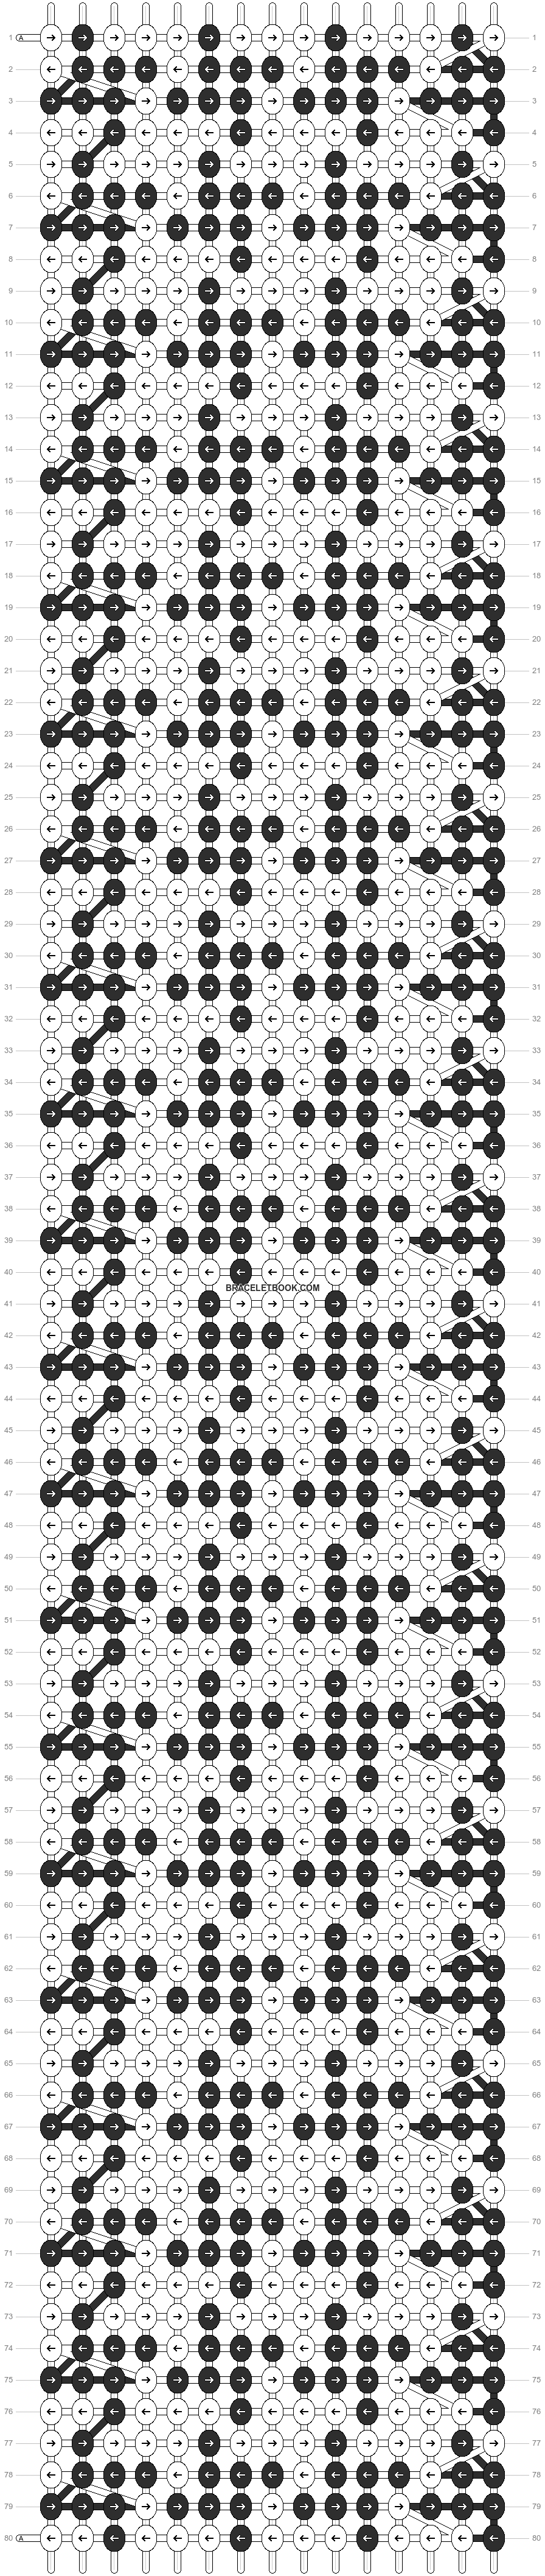 Alpha pattern #4556 pattern